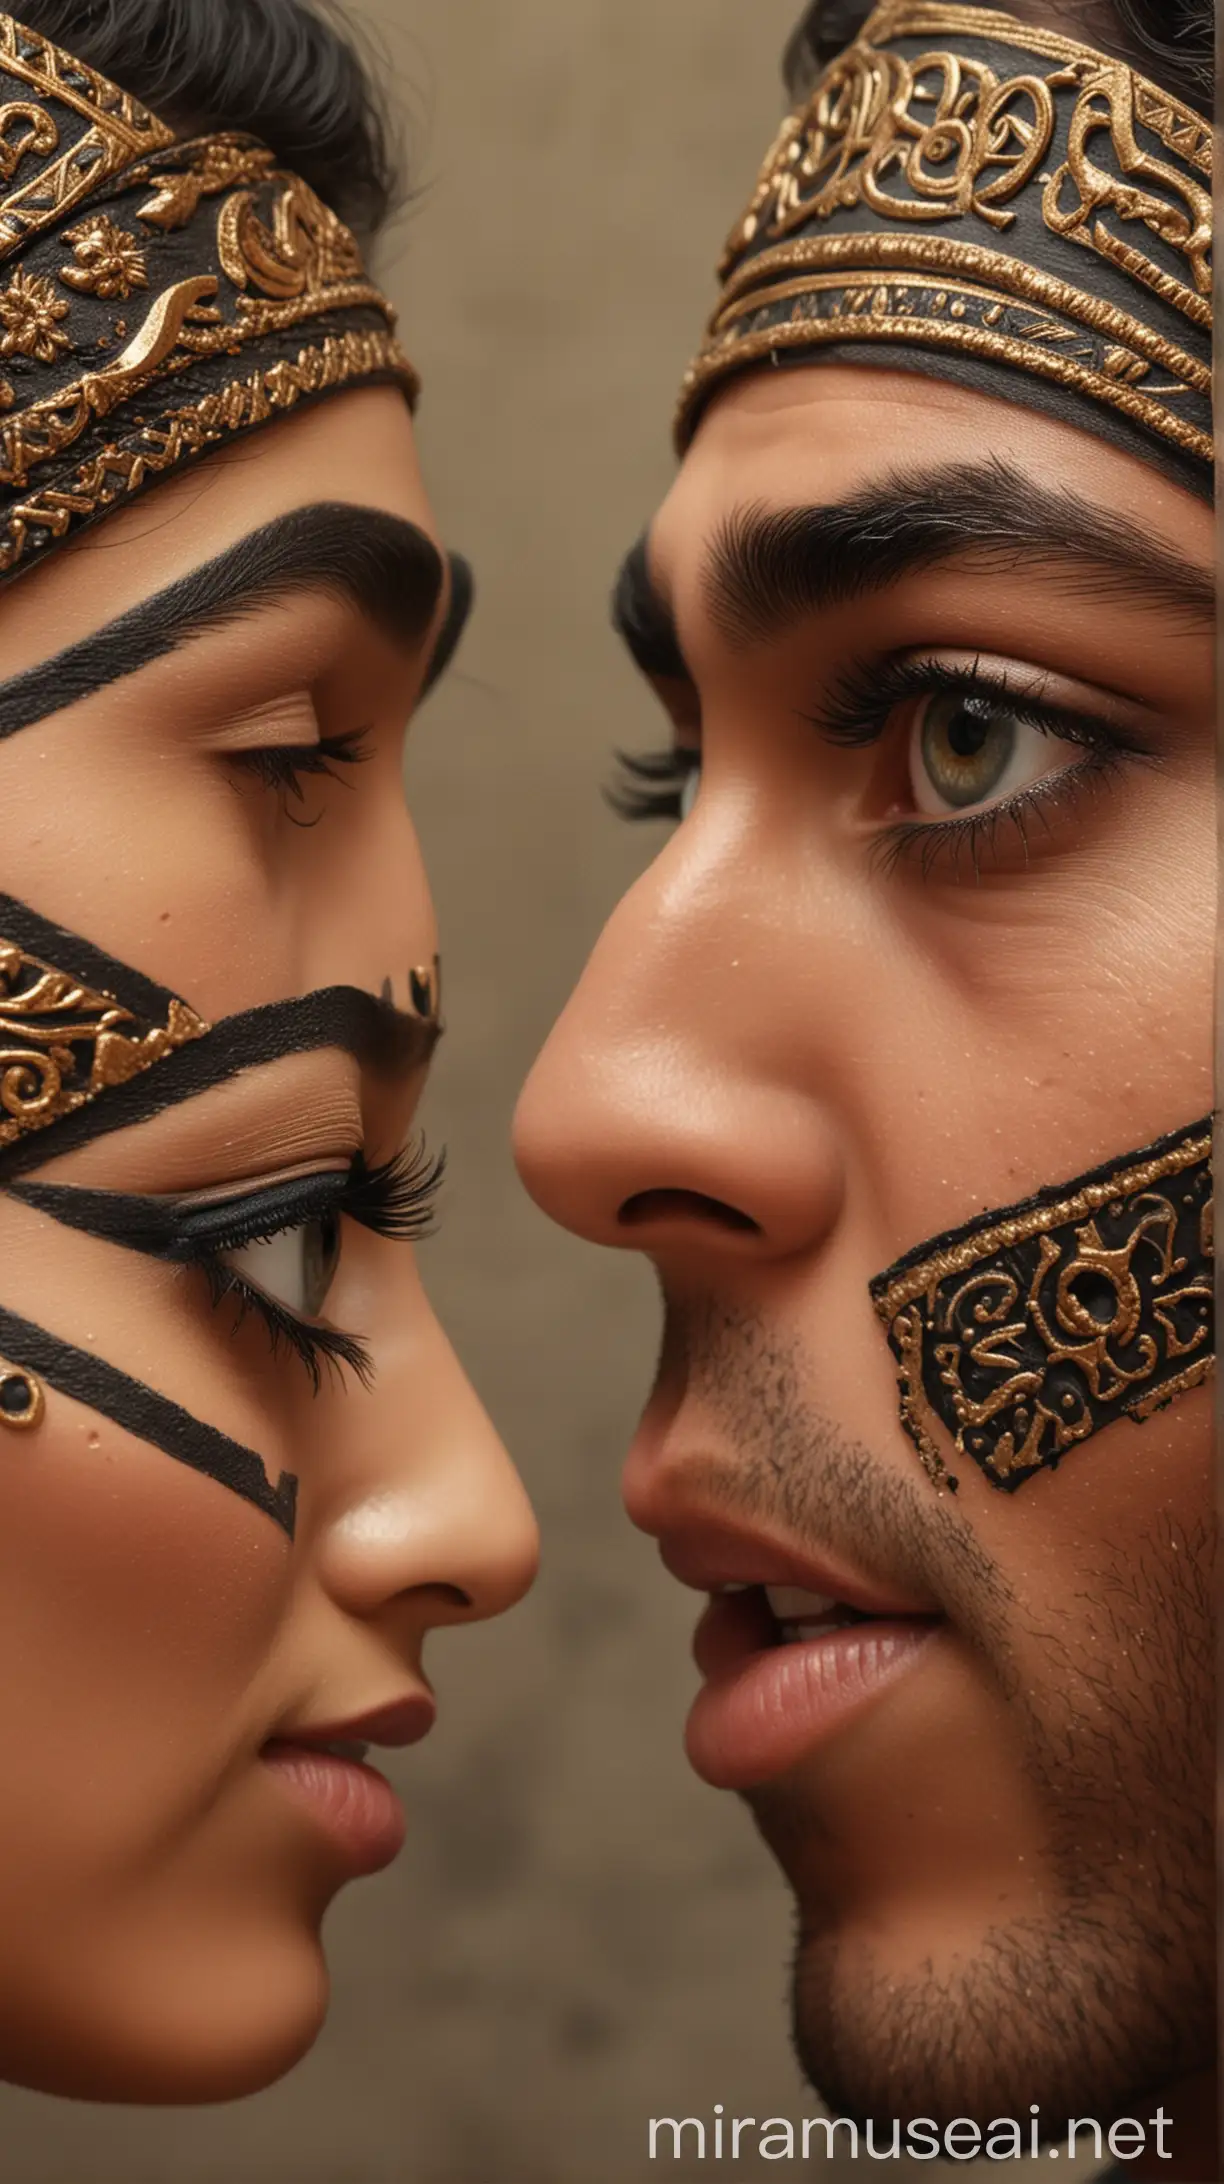 Egyptian Couple Applying Kohl with Intricate Eye Designs